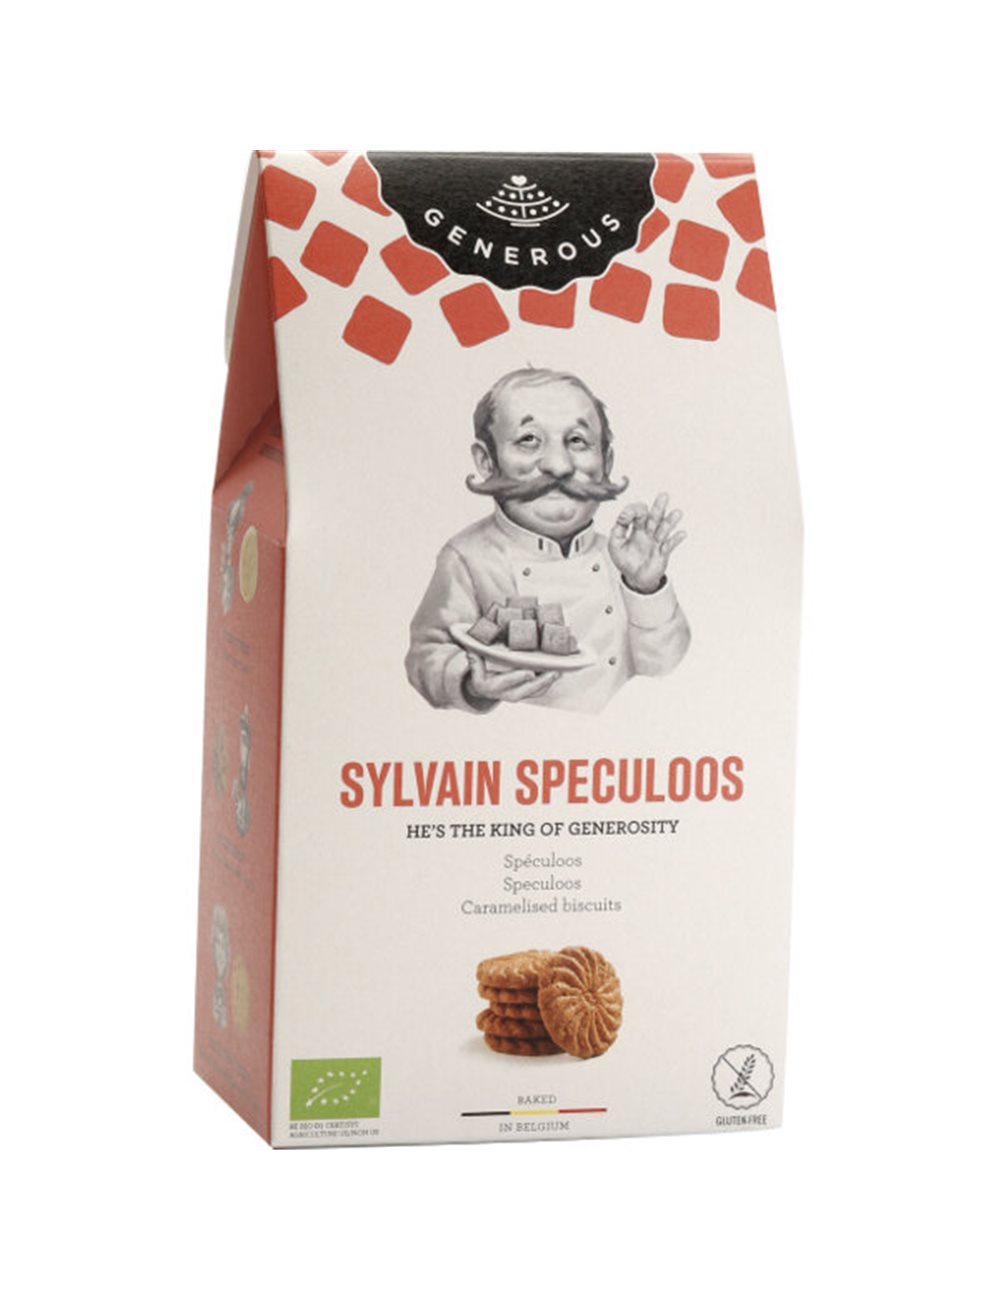 Sylvain Speculoos BIO (glutenvrij) 100g